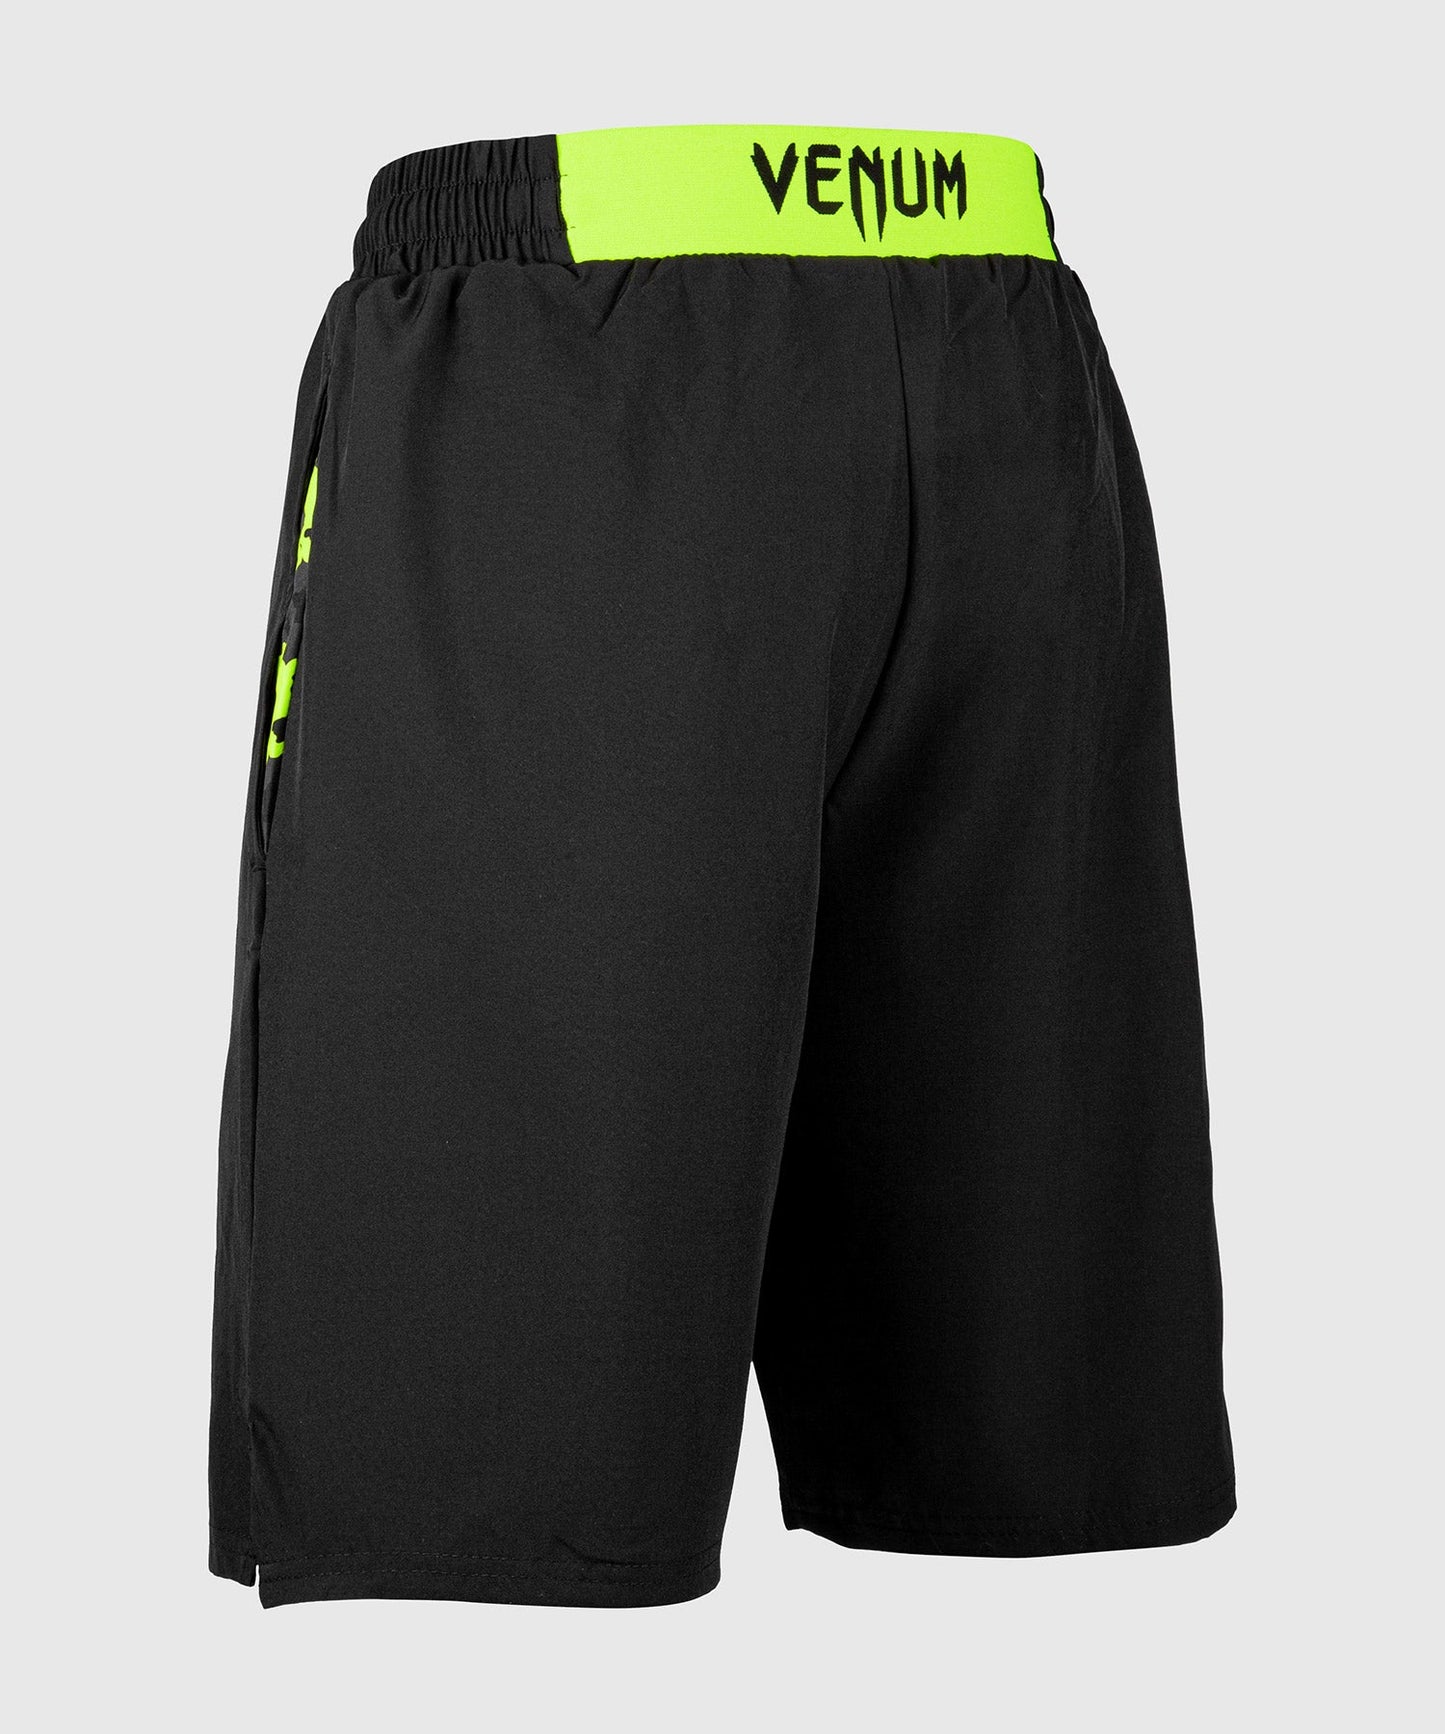 Venum Classic Training Shorts - Black/Neo Yellow